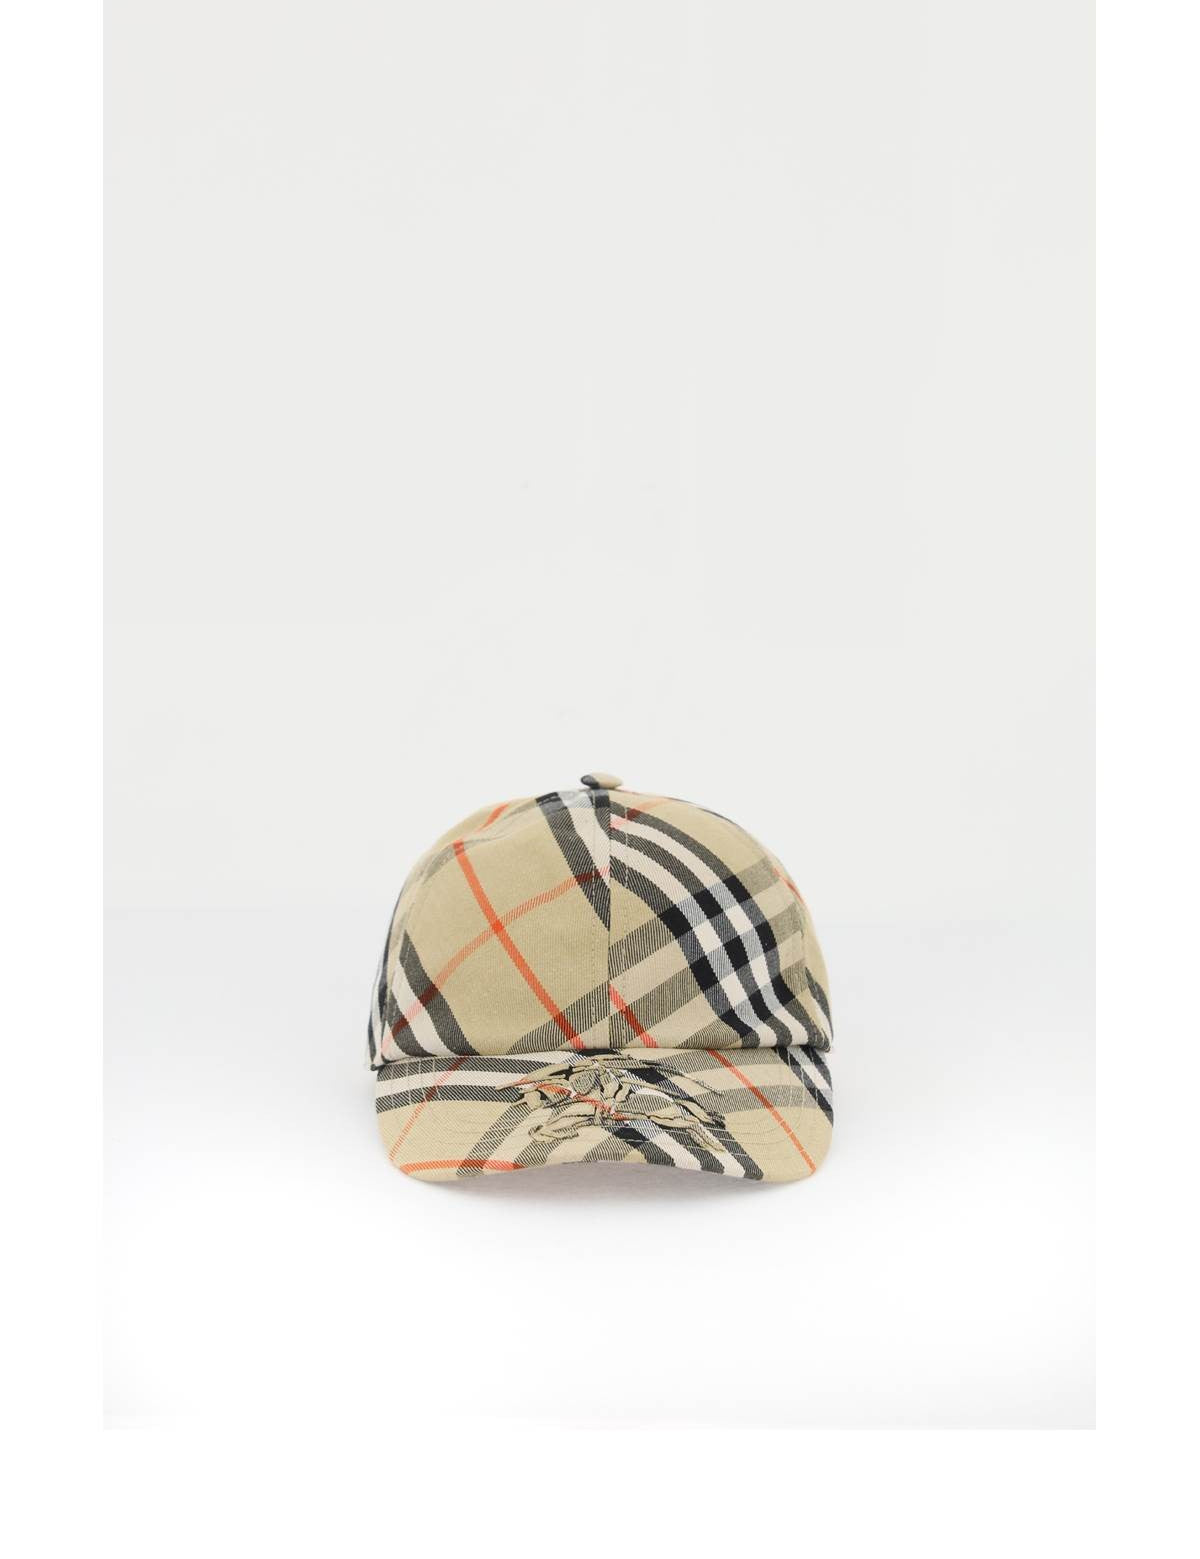 burberry-ered-baseball-cap-in-cotton-blend.jpg